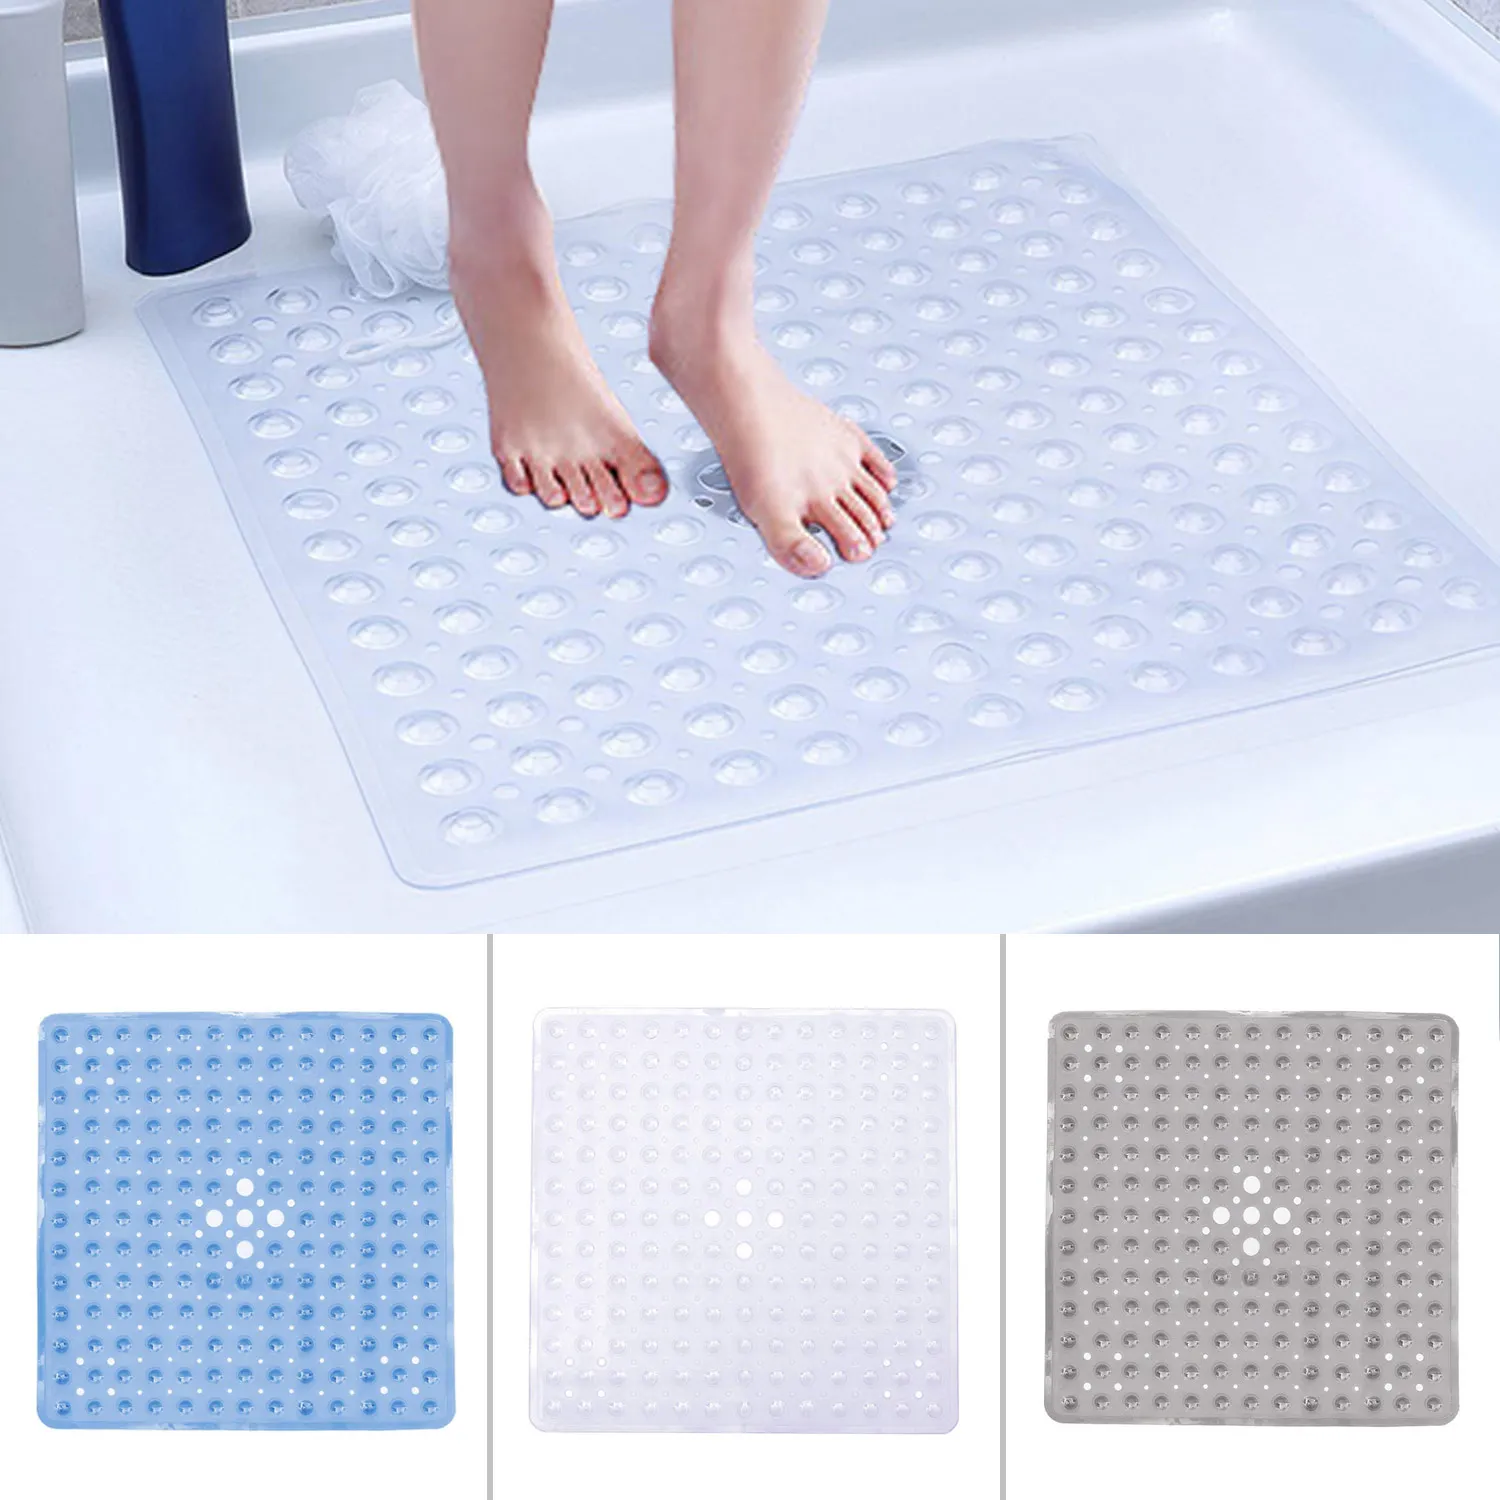 

Square Non-Slip Bath Shower Bathroom Floor Bathtub Mat with Suction Cups for Home Hotels Restaurants Balcony 53x53cm